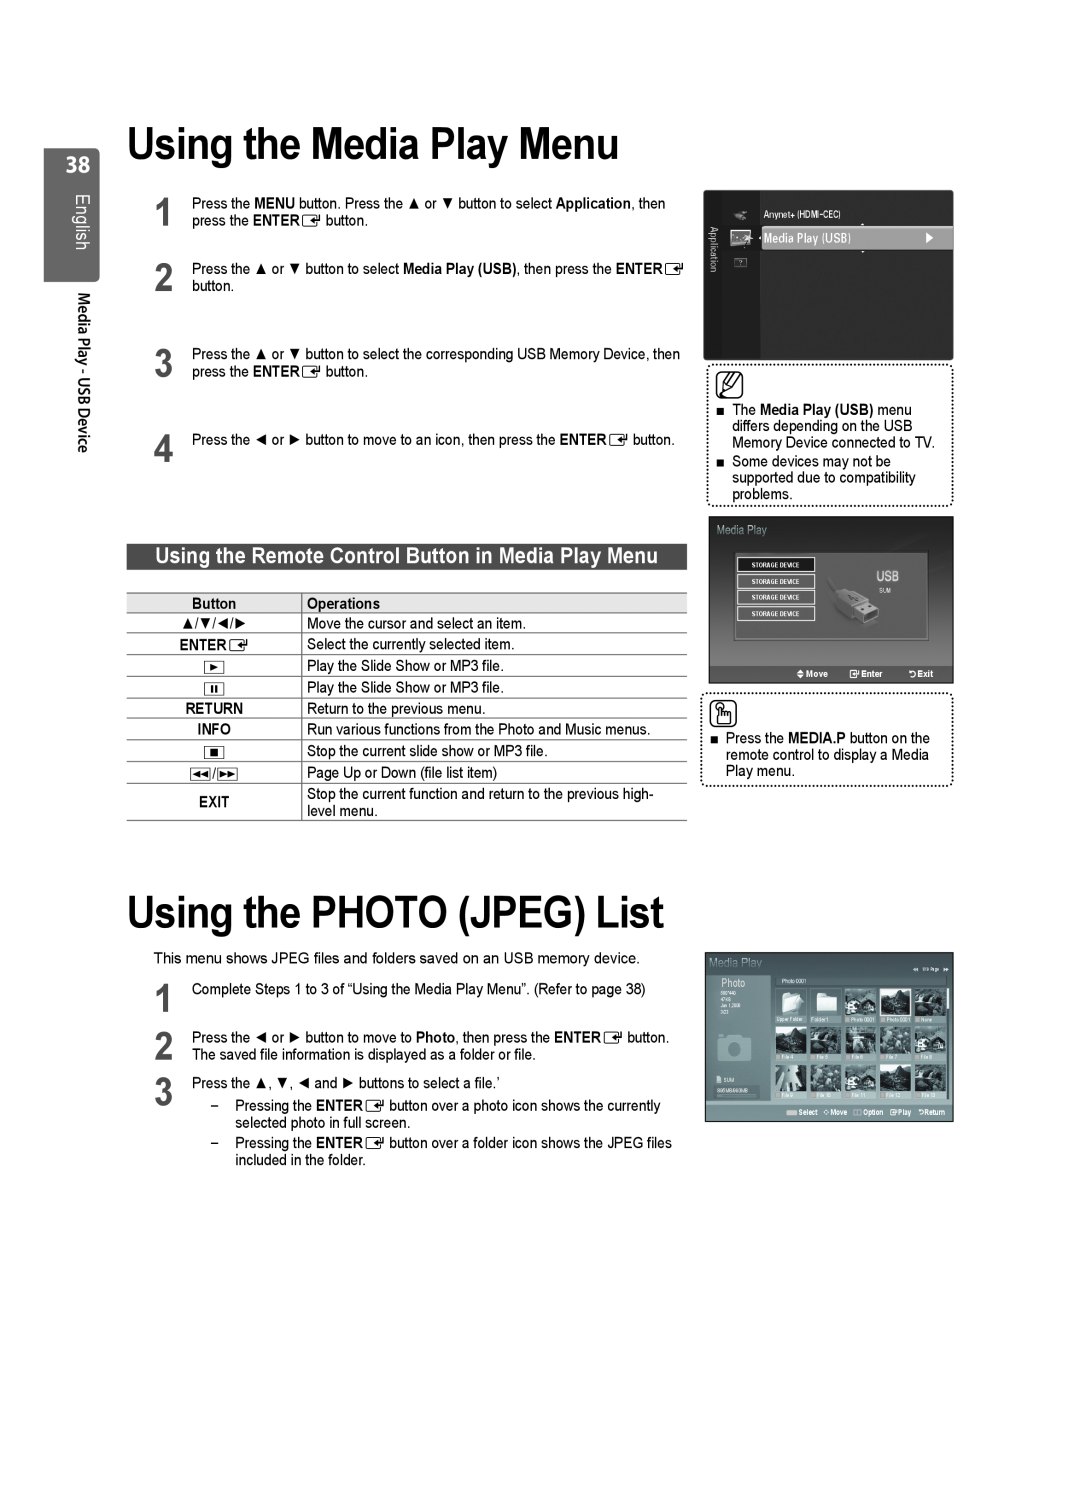 Samsung LE46B551 Using the Media Play Menu, Using the Remote Control Button in Media Play Menu, Using the PHOTO JPEG List 